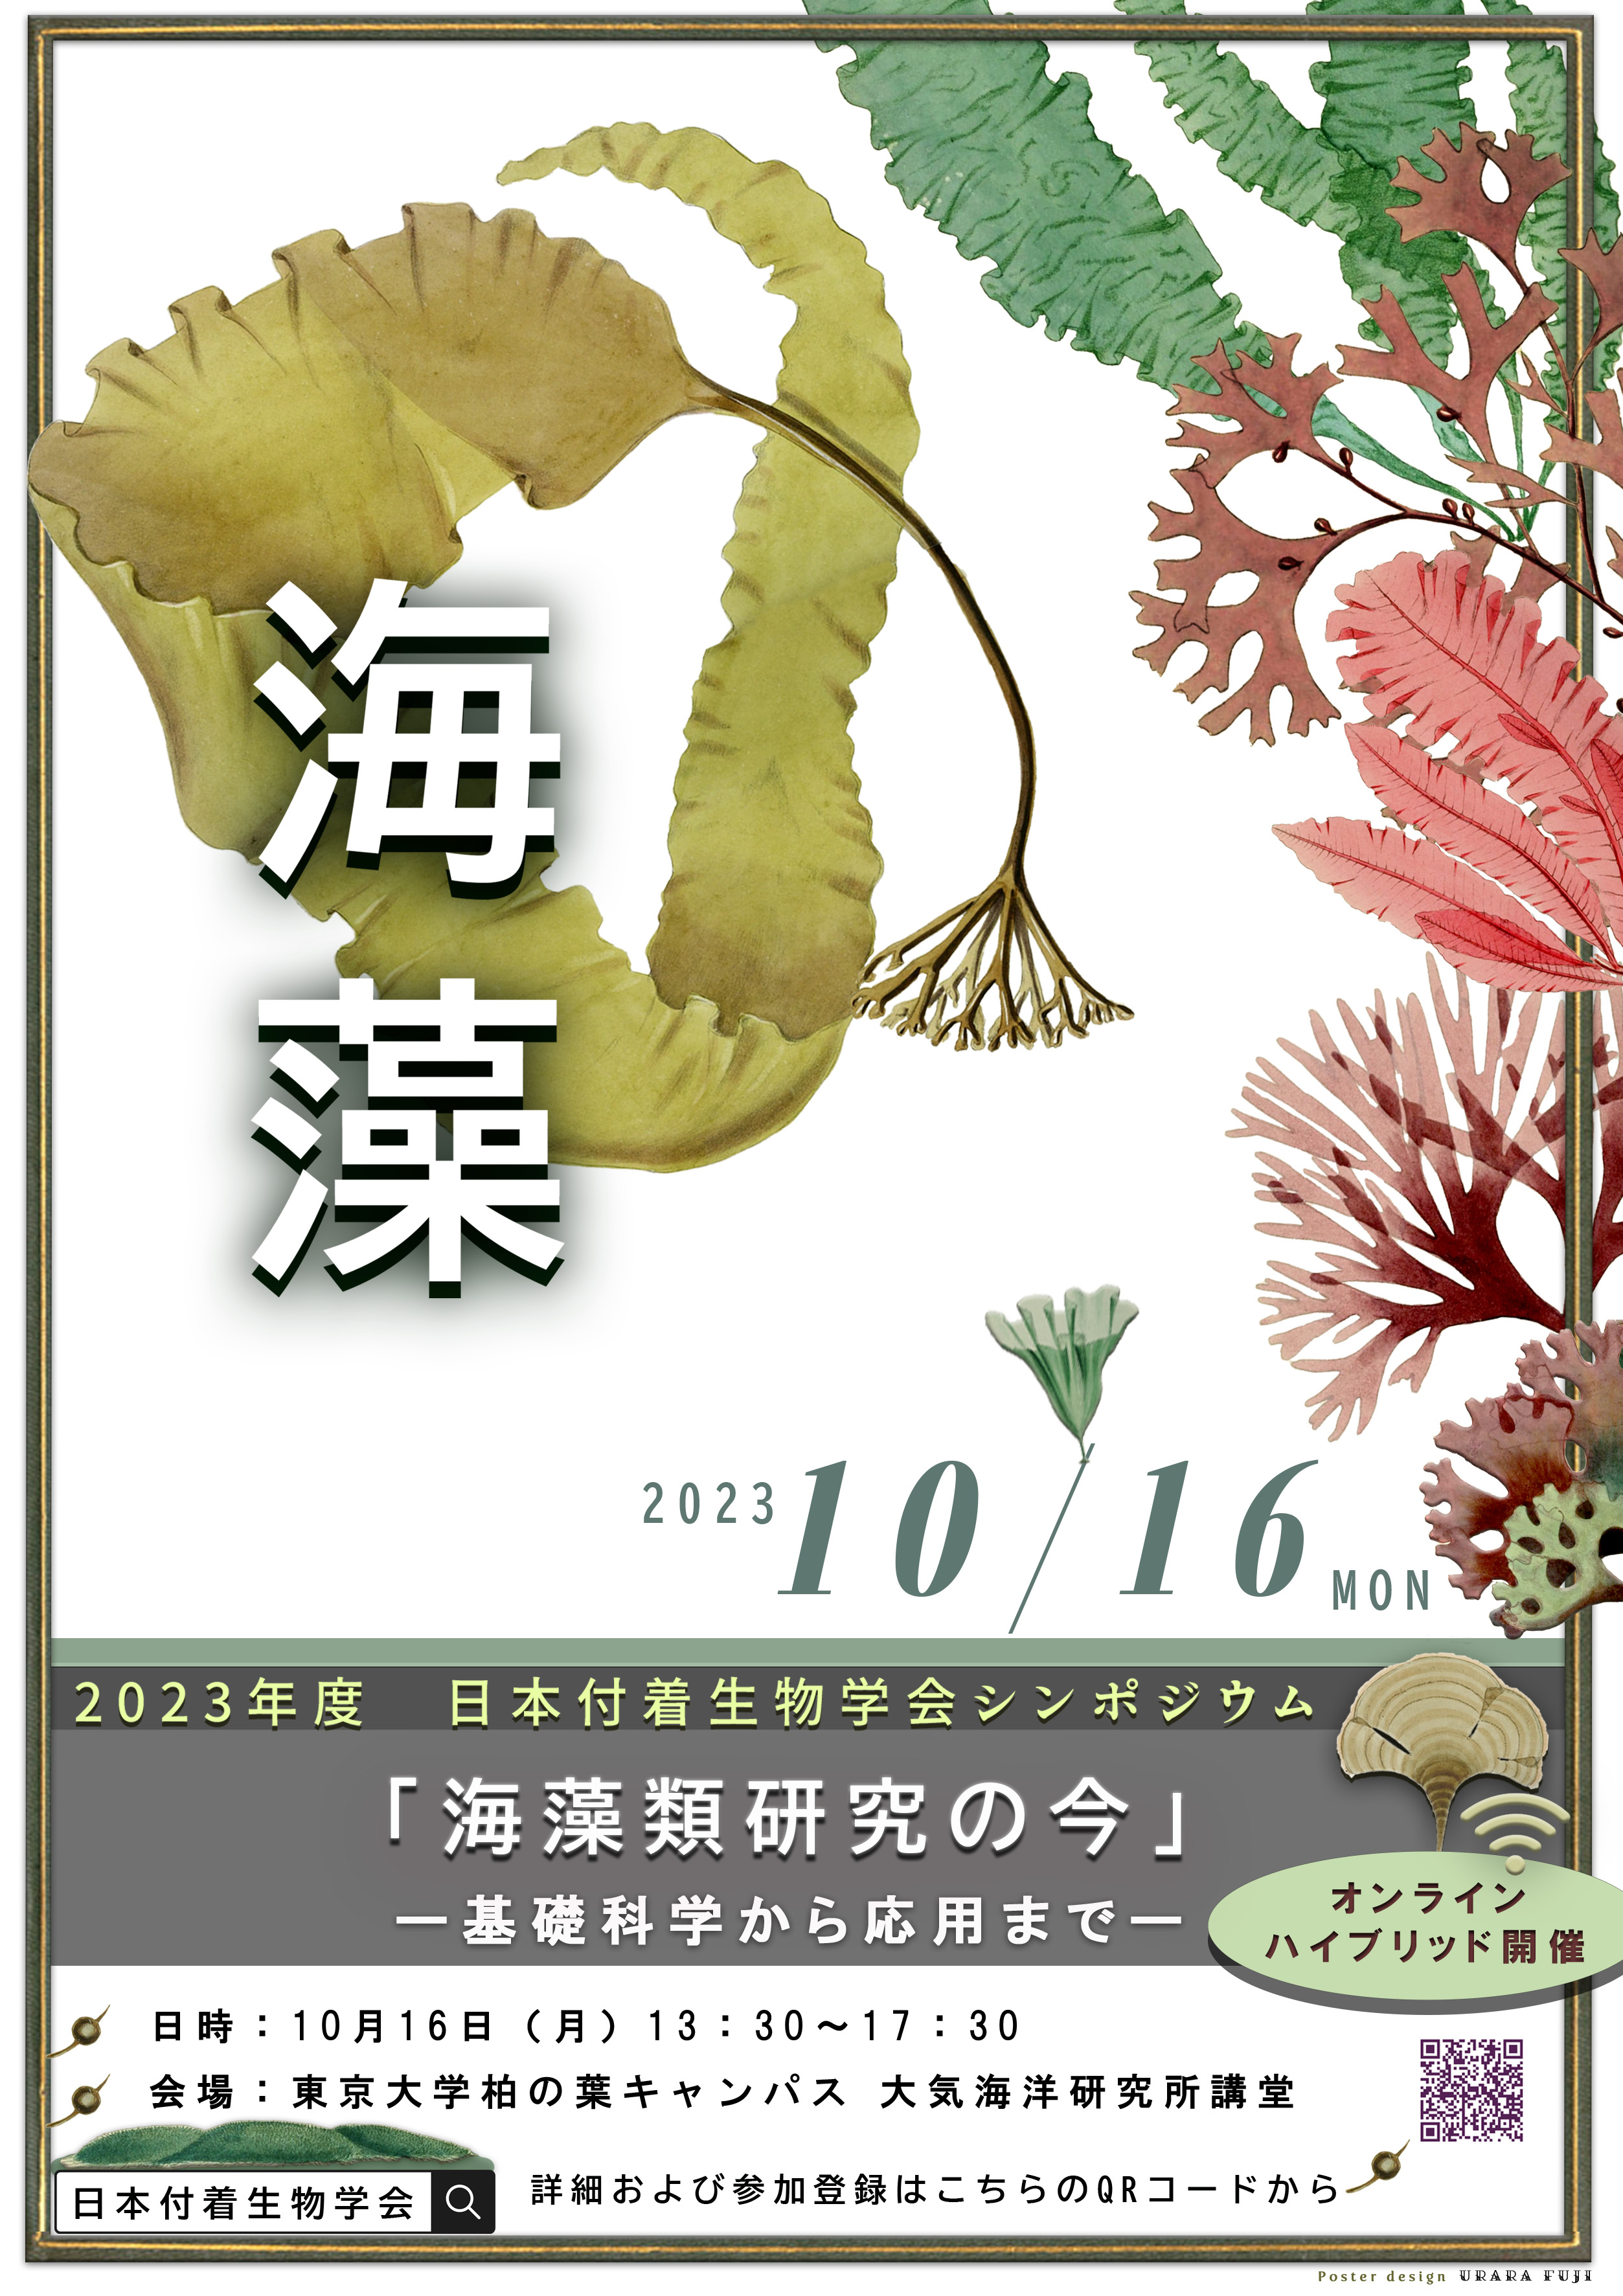 http://www.sosj.jp/SOSJ_symposium2023_poster.jpg